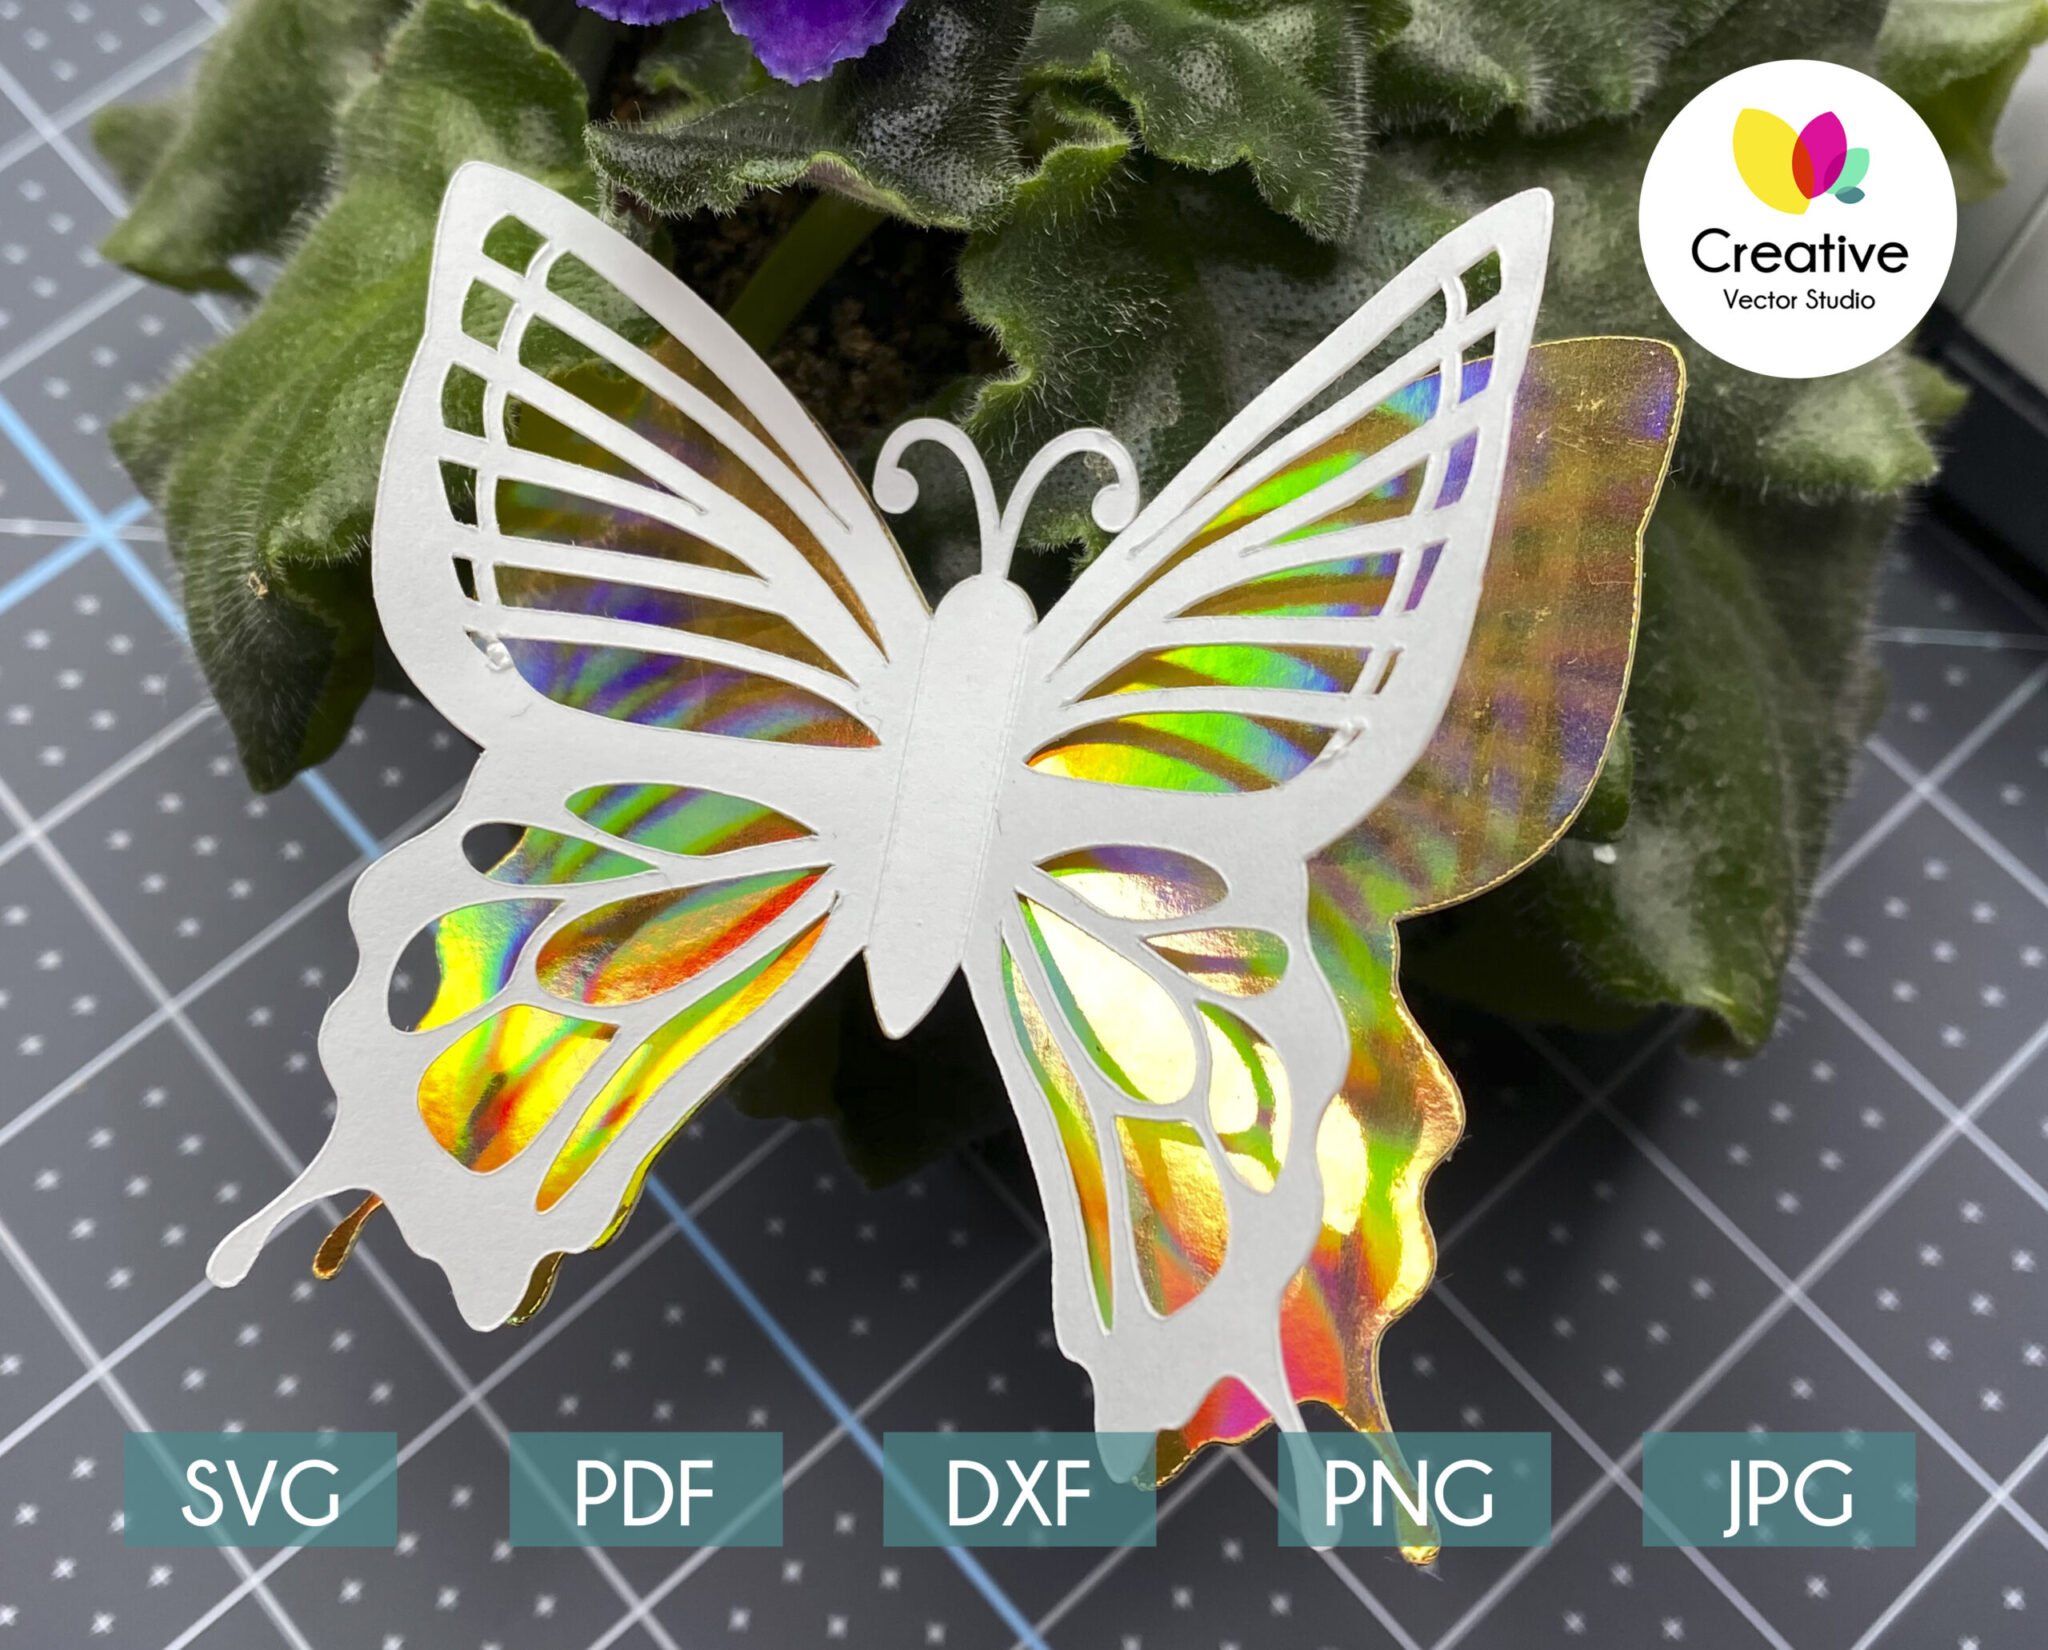 3D Butterfly SVG #3 Cutting Template | Creative Vector Studio